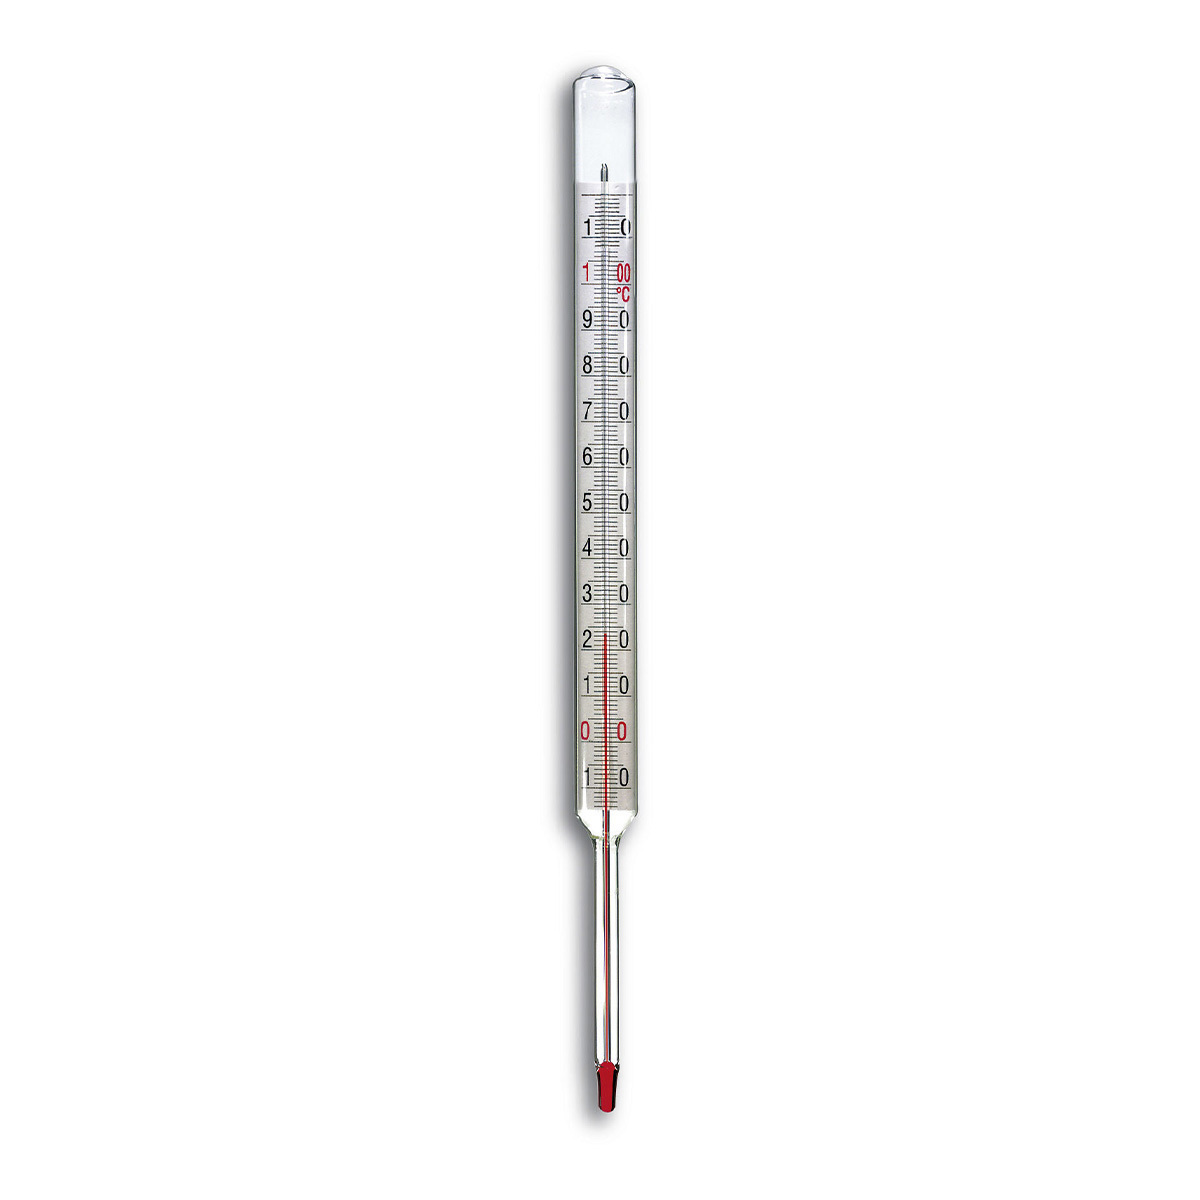 14-1005-analoger-thermometereinsatz-glas-1200x1200px.jpg